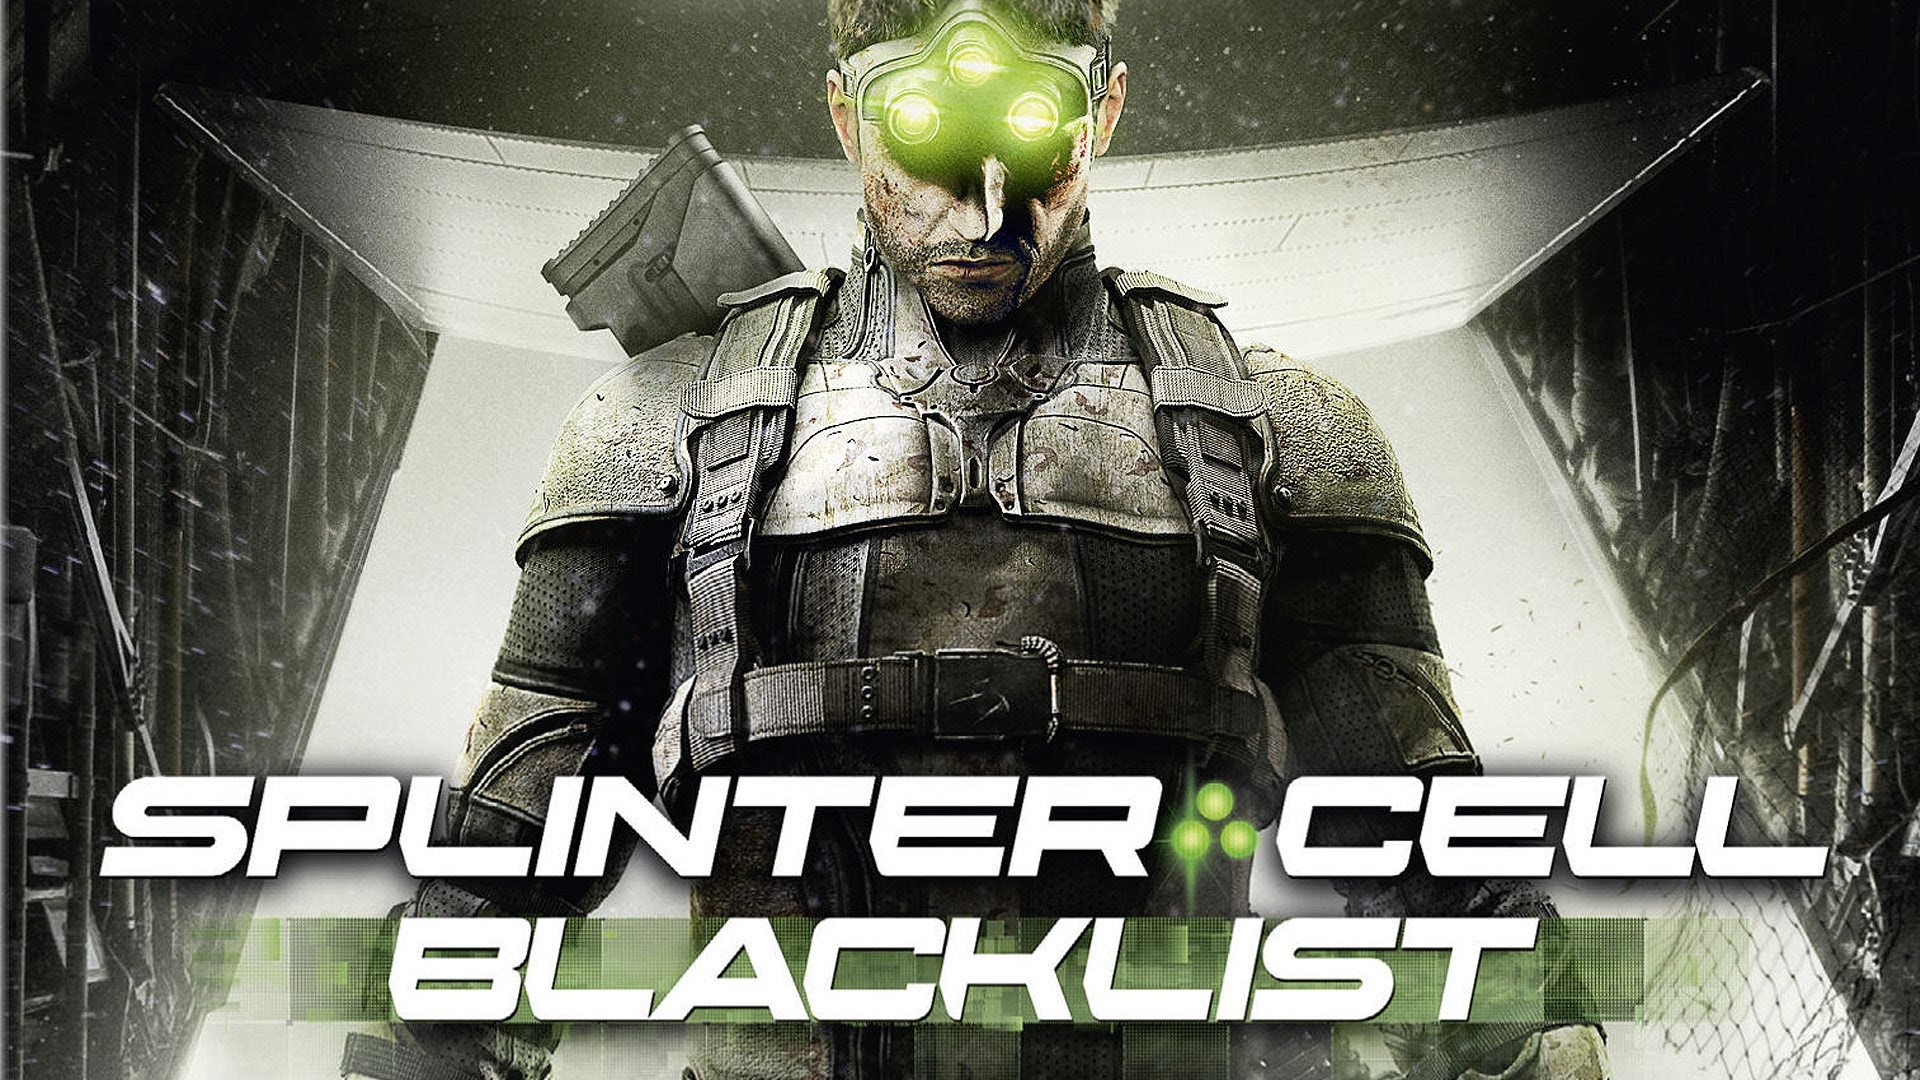 Splinter Cell Blacklist on Behance